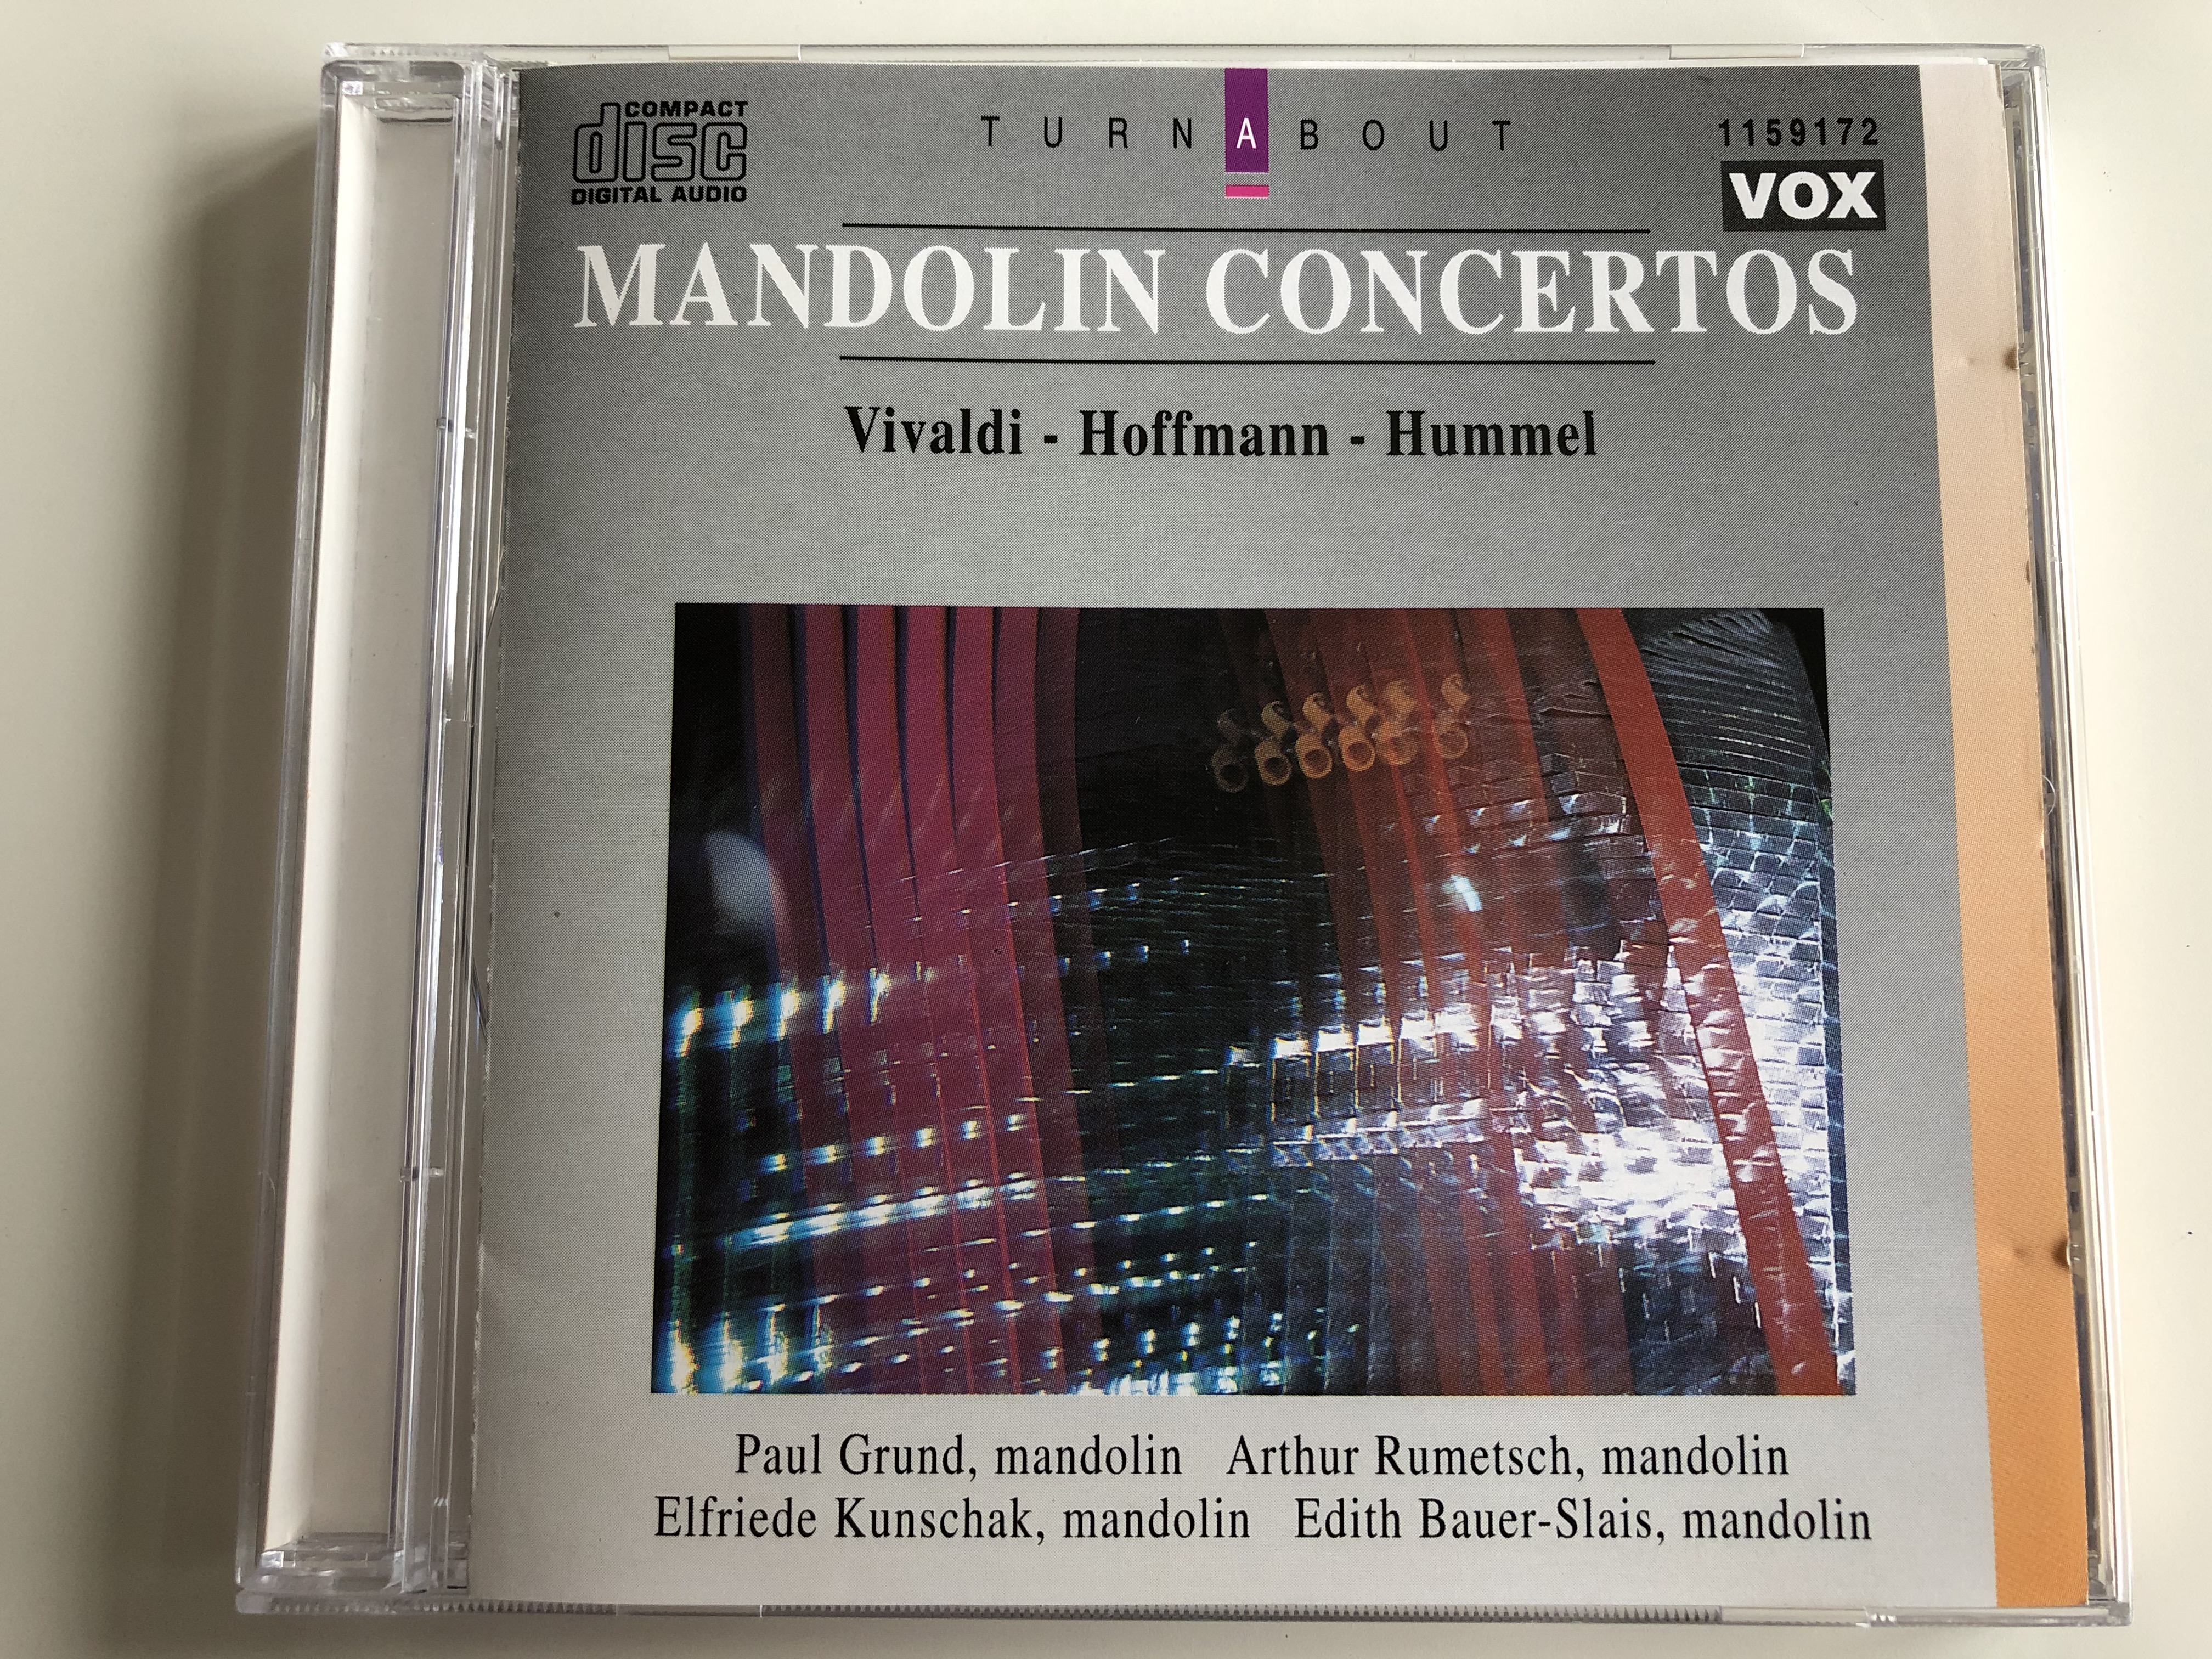 mandolin-concertos-vivaldi-hoffmann-hummel-mandolin-paul-grund-arthur-rumetsch-elfriede-kunschak-edith-bauer-slais-dureco-audio-cd-1994-stereo-1159172-1-.jpg